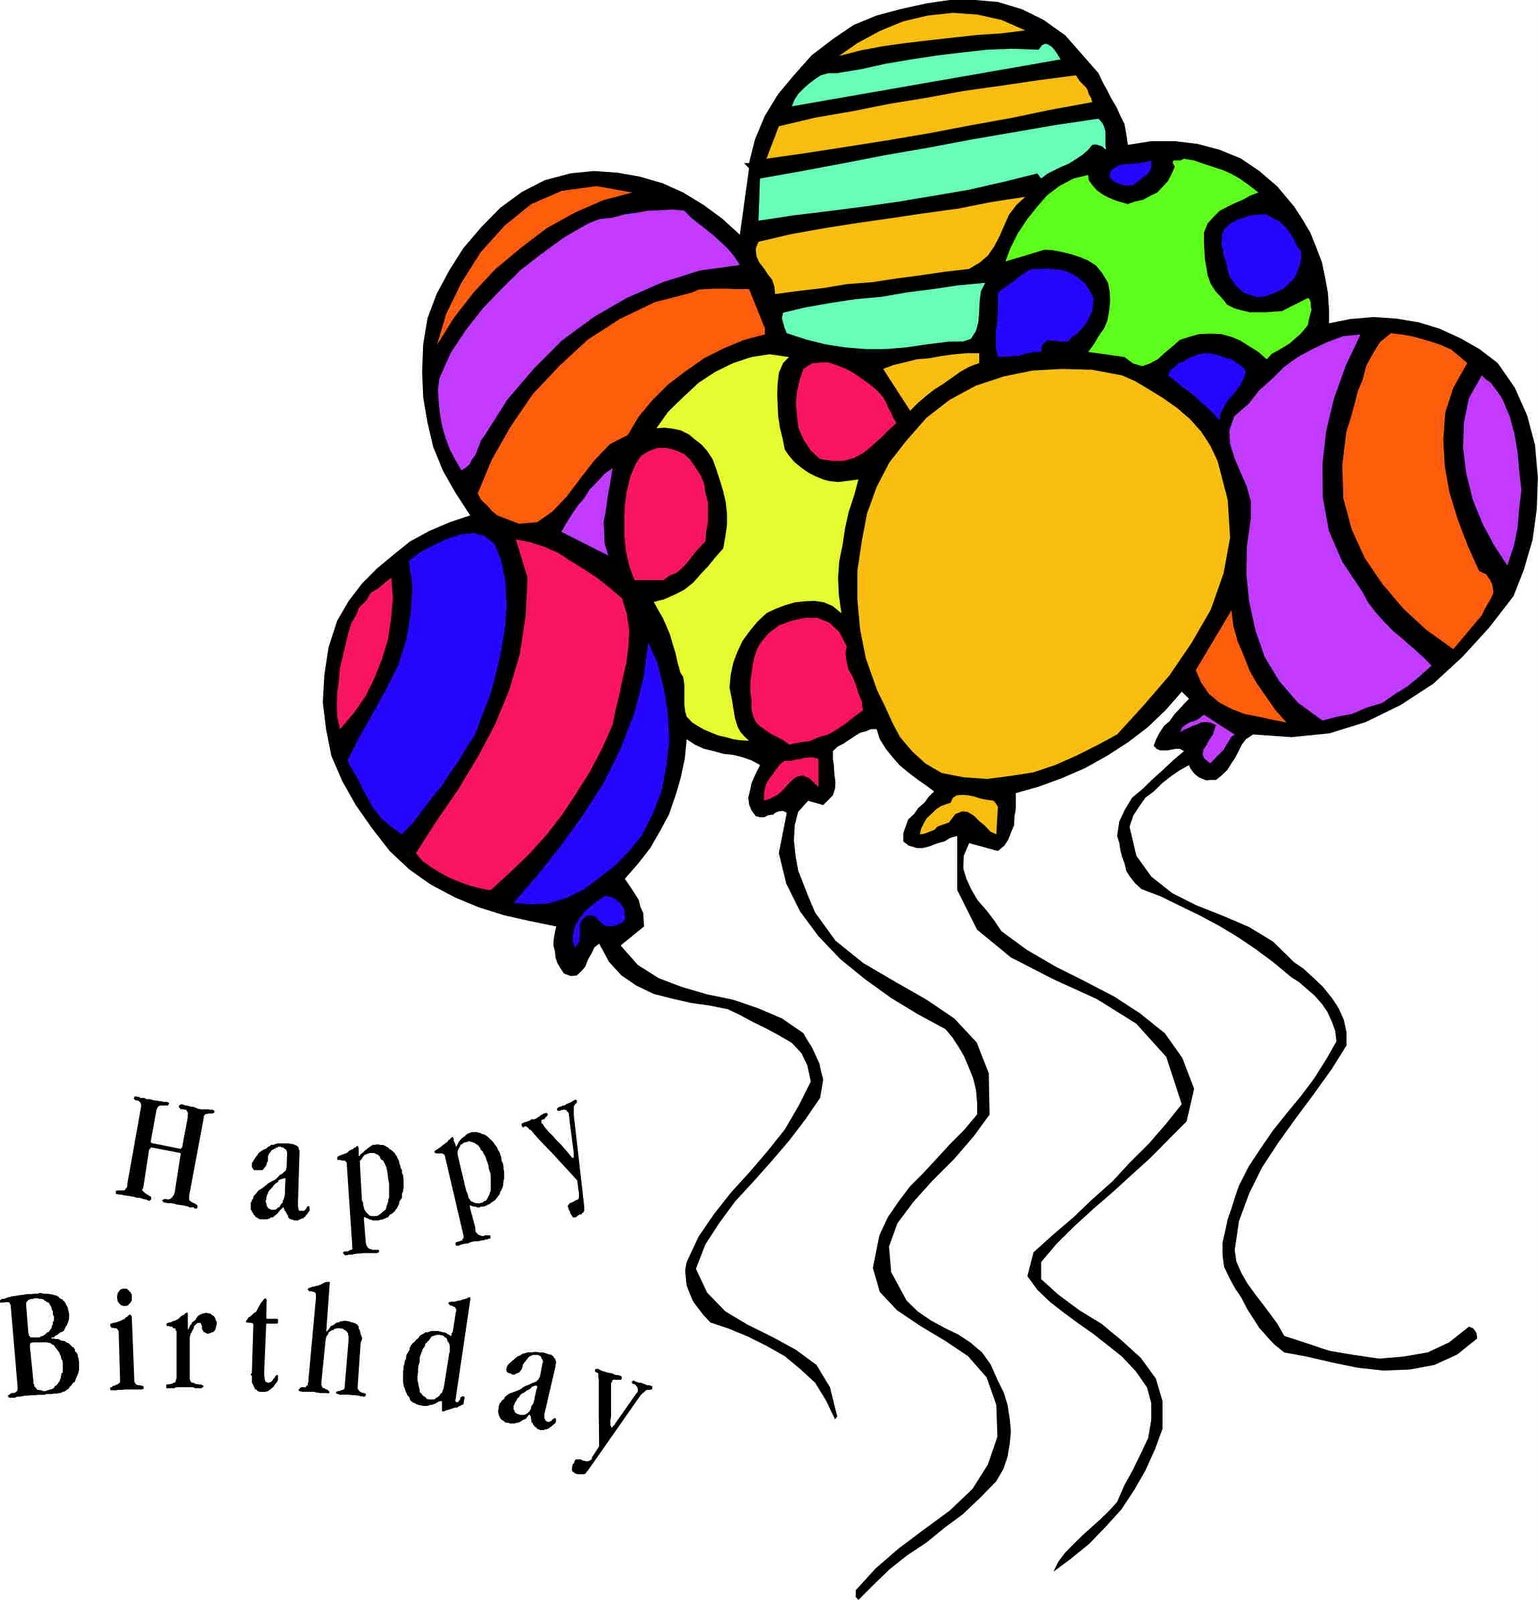 Happy birthday balloon clip art